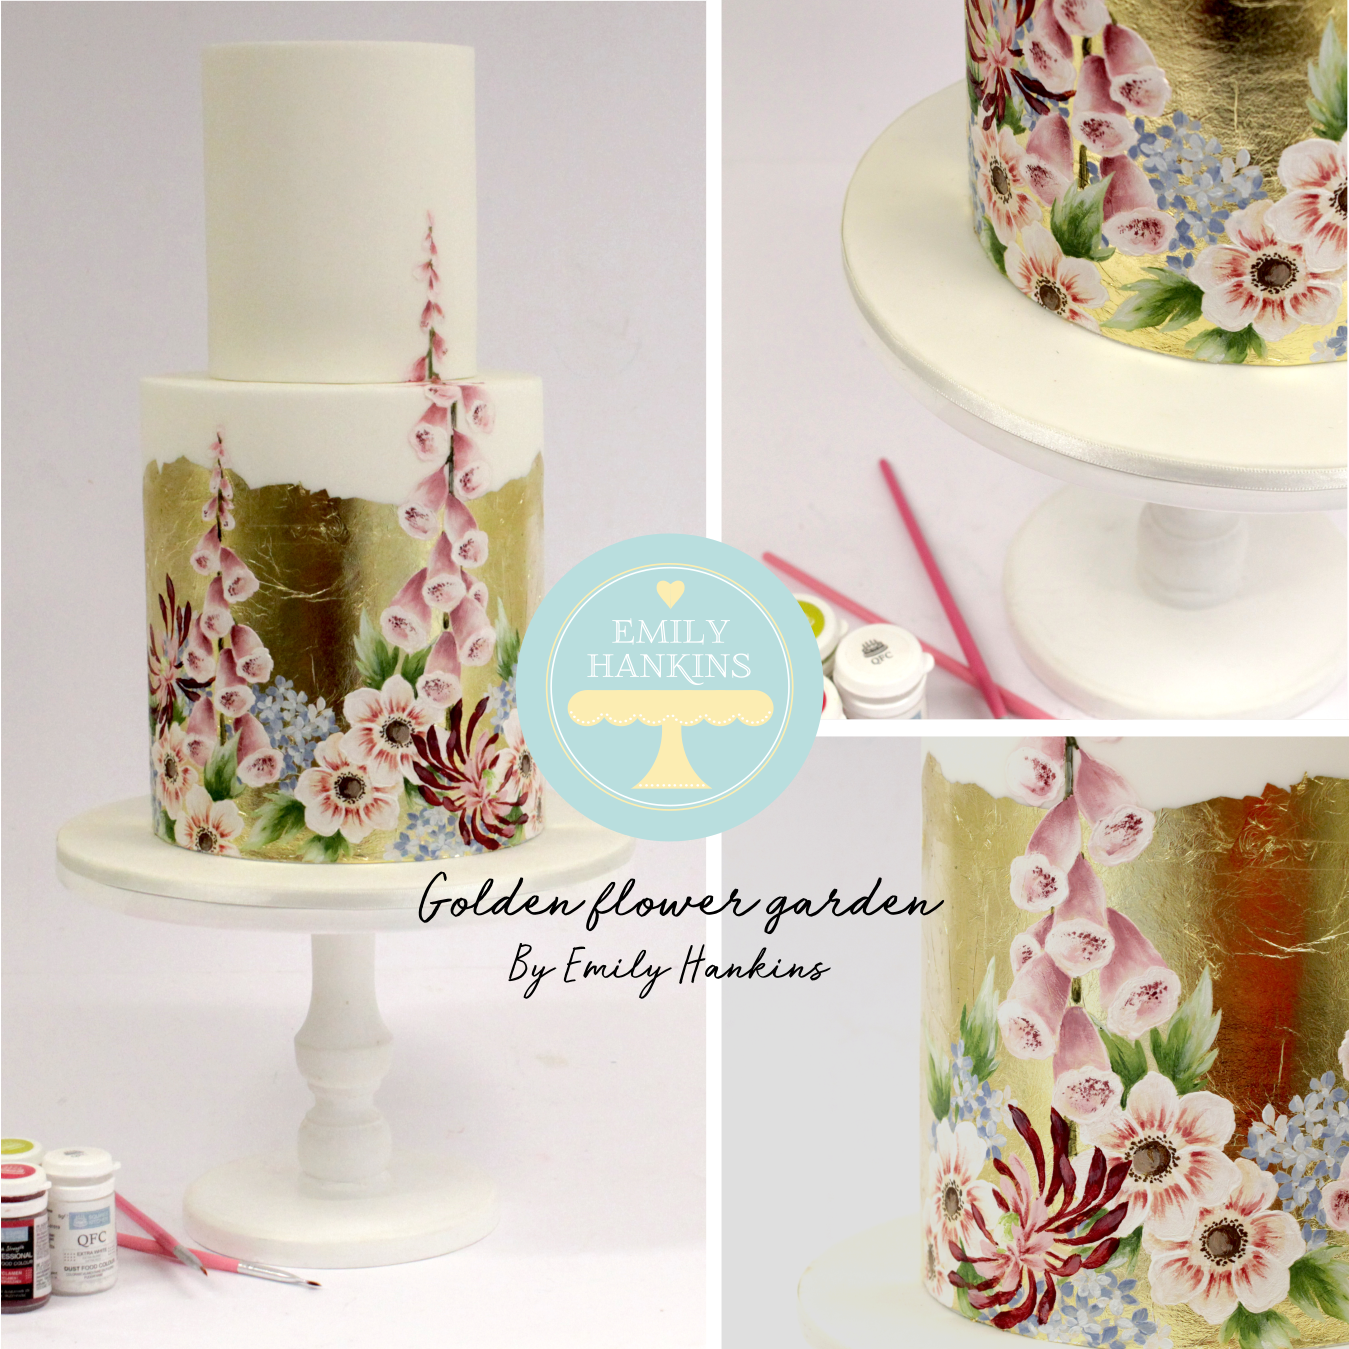 Top more than 134 wedding cakes hamilton super hot - in.eteachers